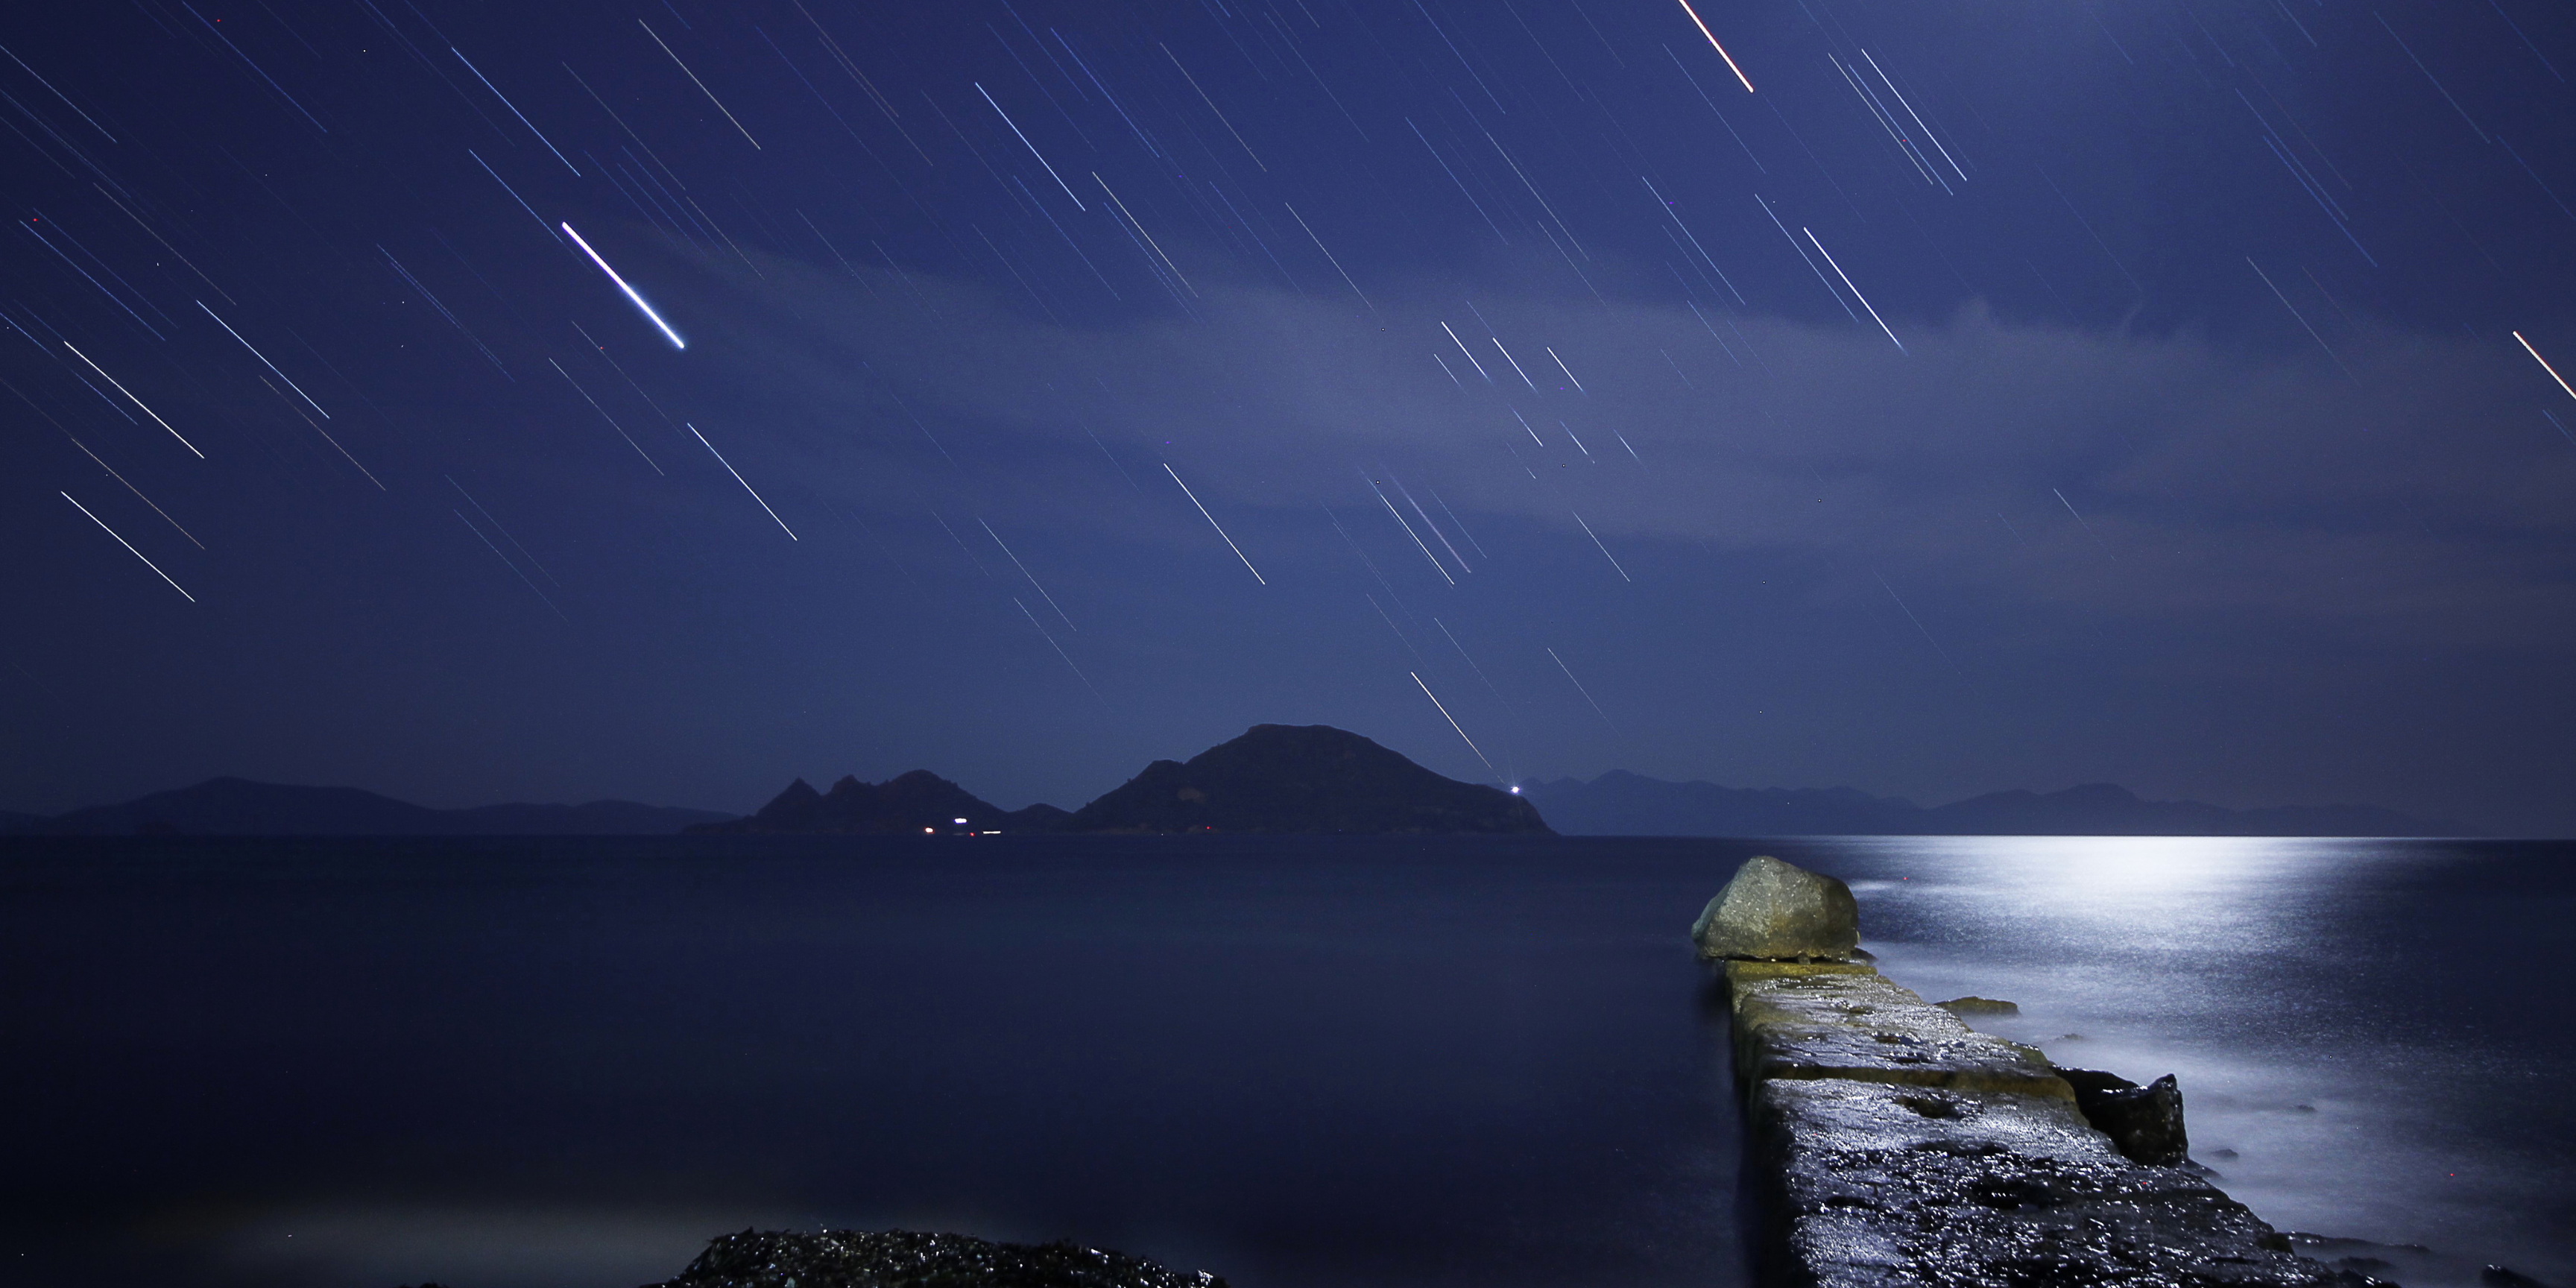 Image of the Perseid meteor shower over the ocean in moonlight.